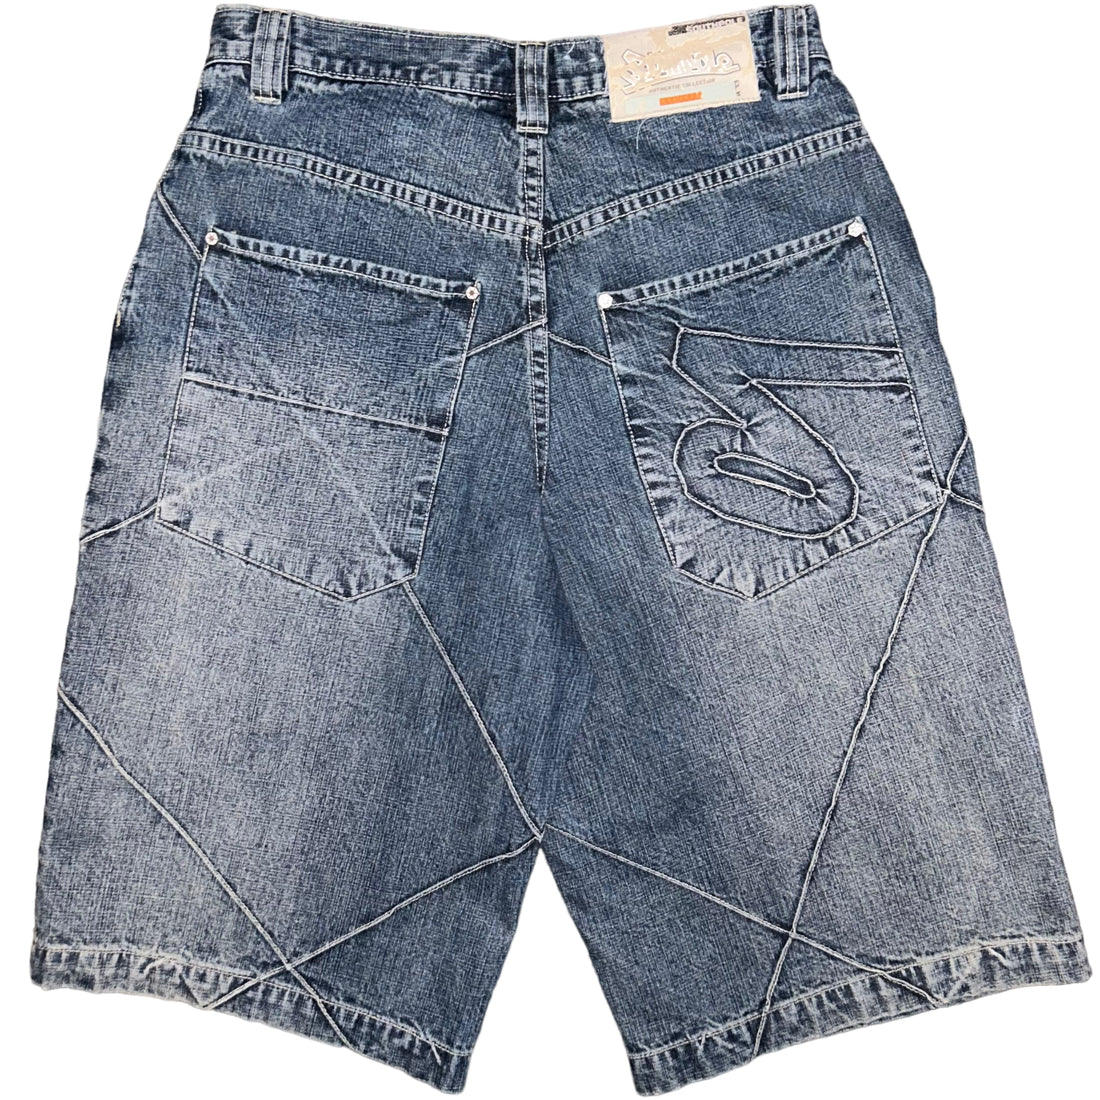 Baggy Shorts SOUTHPOLE Vintage  (30 USA  S)